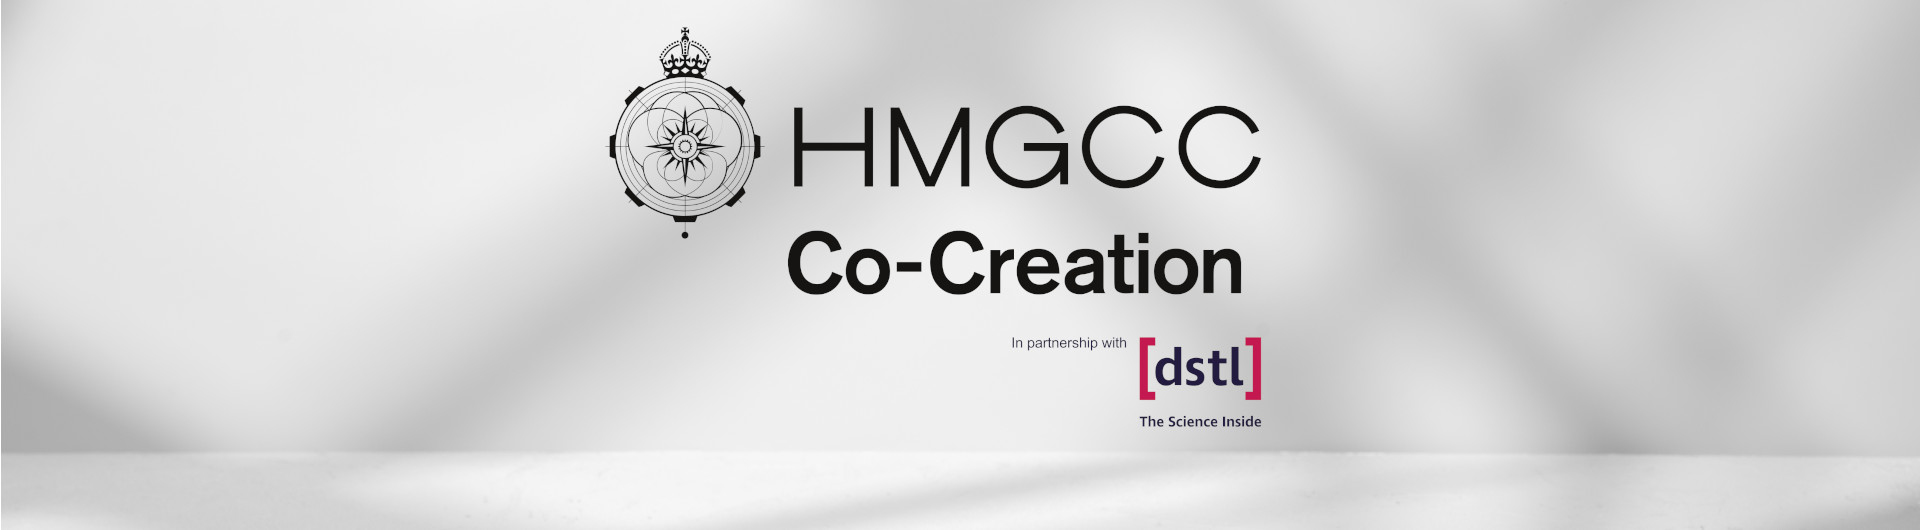 The HMGCC co-creation logo on s grey background